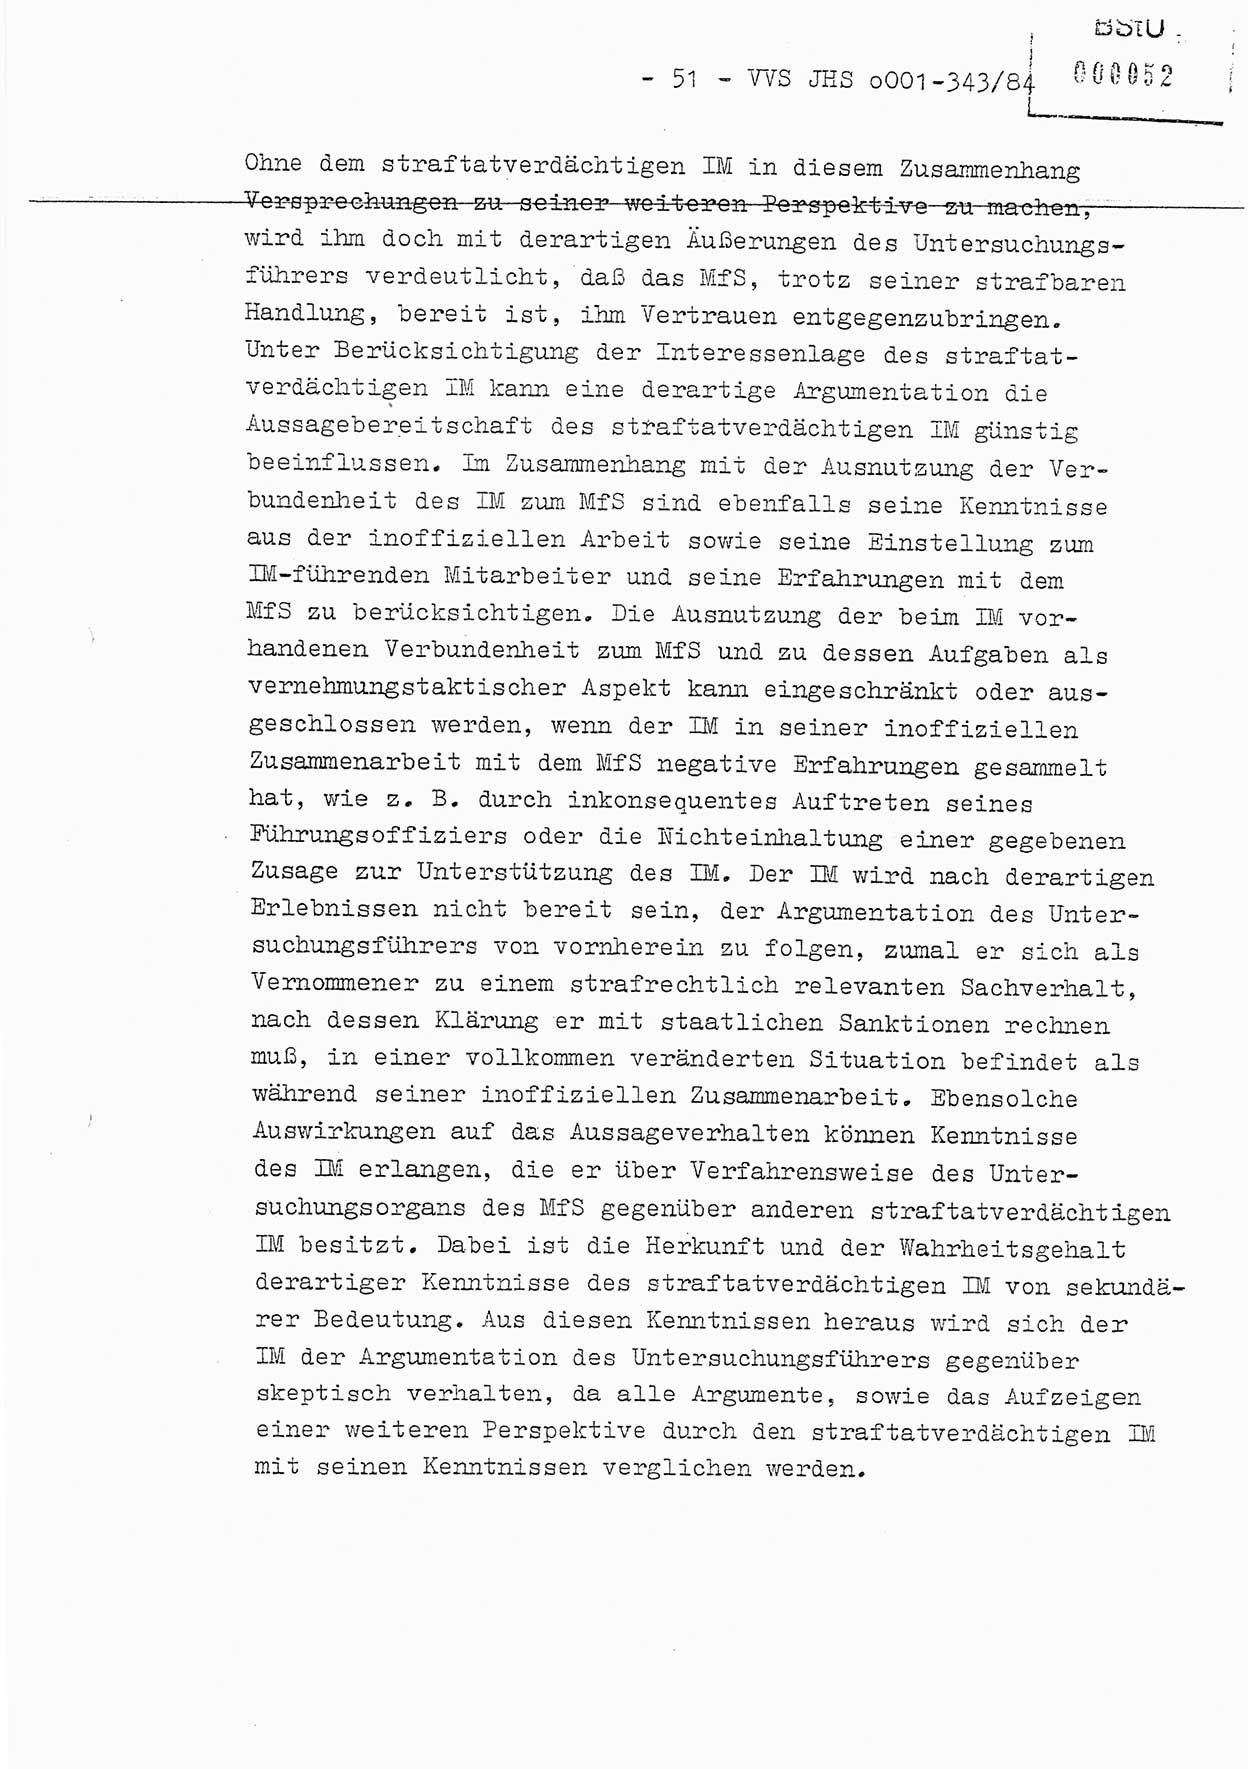 Diplomarbeit, Oberleutnant Bernd Michael (HA Ⅸ/5), Oberleutnant Peter Felber (HA IX/5), Ministerium für Staatssicherheit (MfS) [Deutsche Demokratische Republik (DDR)], Juristische Hochschule (JHS), Vertrauliche Verschlußsache (VVS) o001-343/84, Potsdam 1985, Seite 51 (Dipl.-Arb. MfS DDR JHS VVS o001-343/84 1985, S. 51)